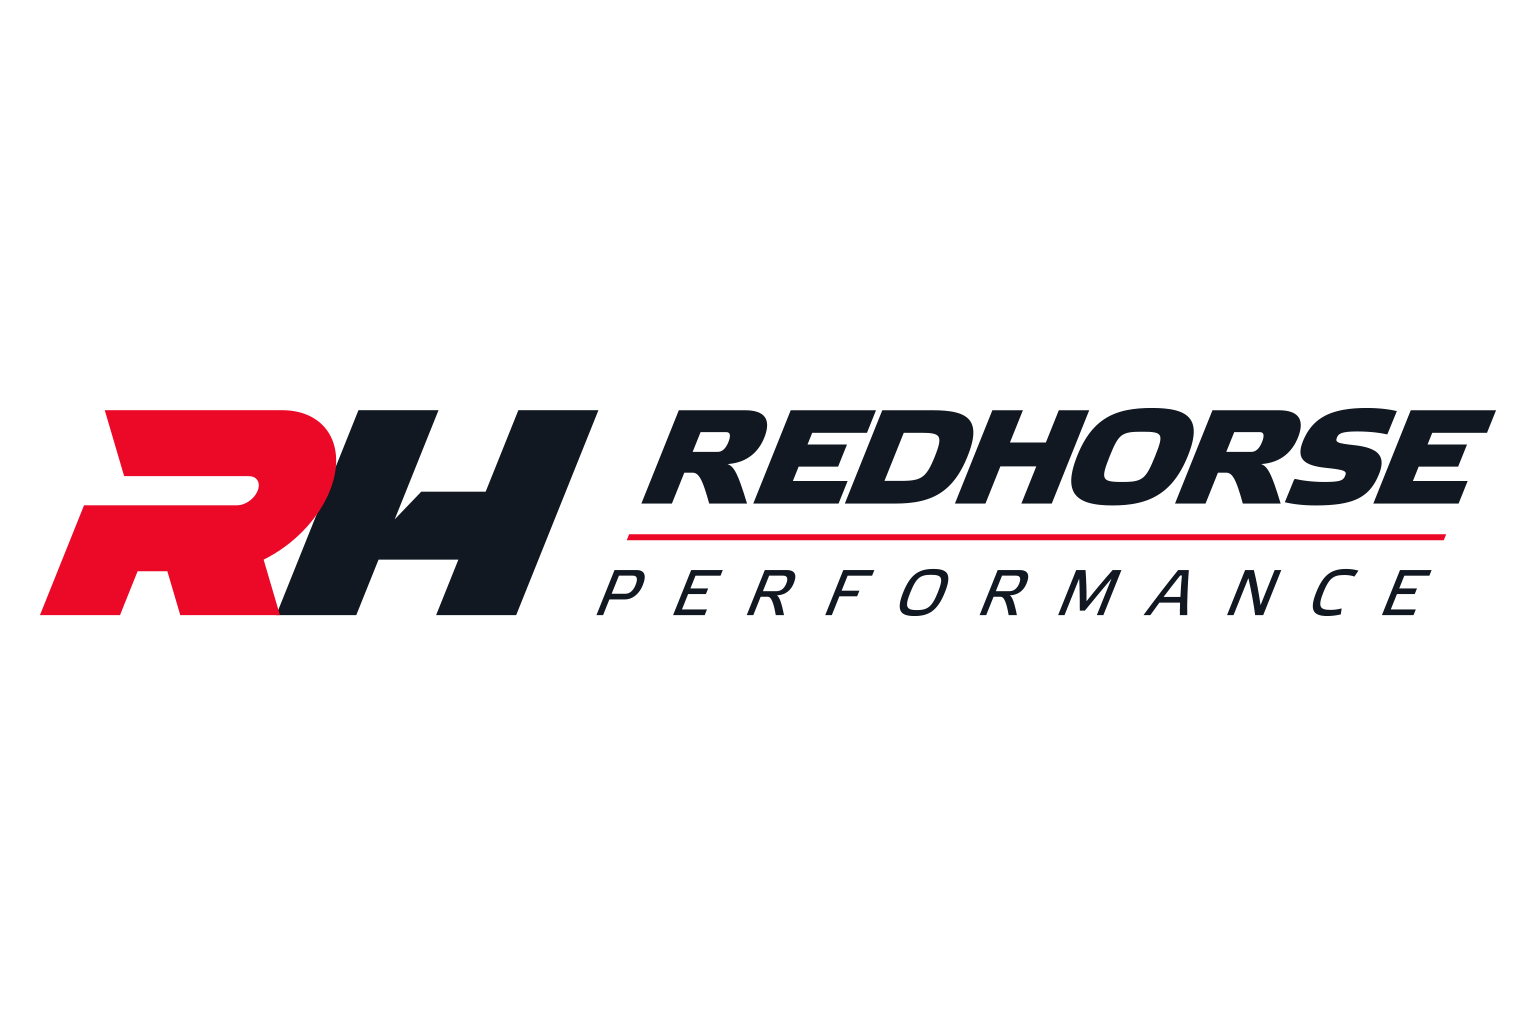 Redhorse Performance